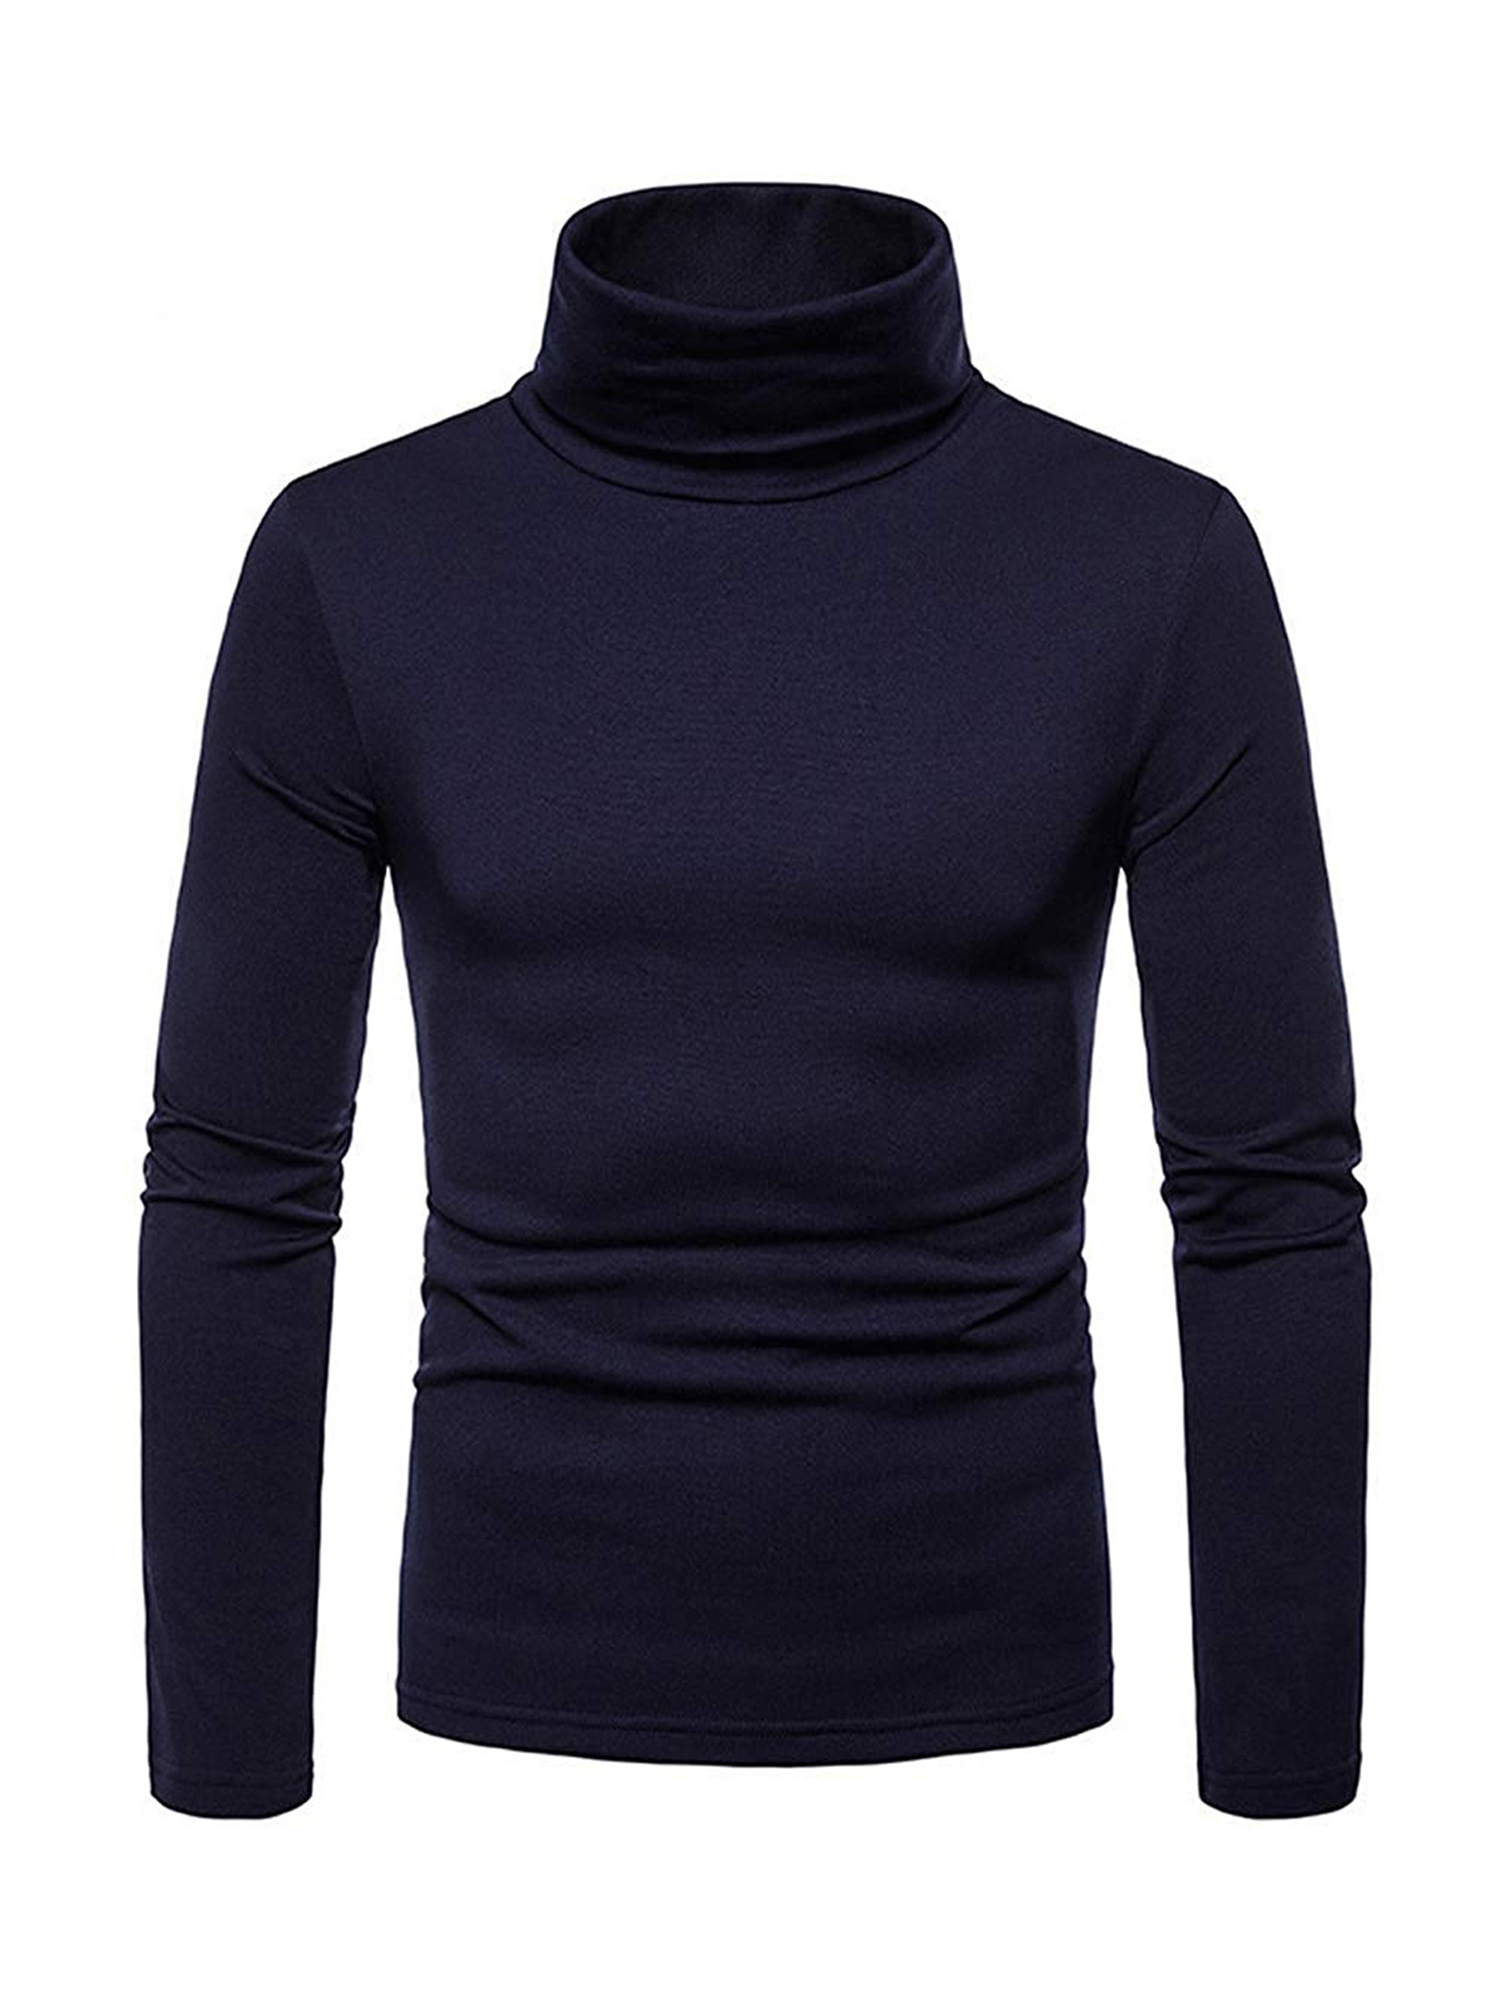 Sunisery Mens Turtleneck Pullover Knitted Jumper Tops Stretch Slim Basic Sweater Shirt - image 1 of 6